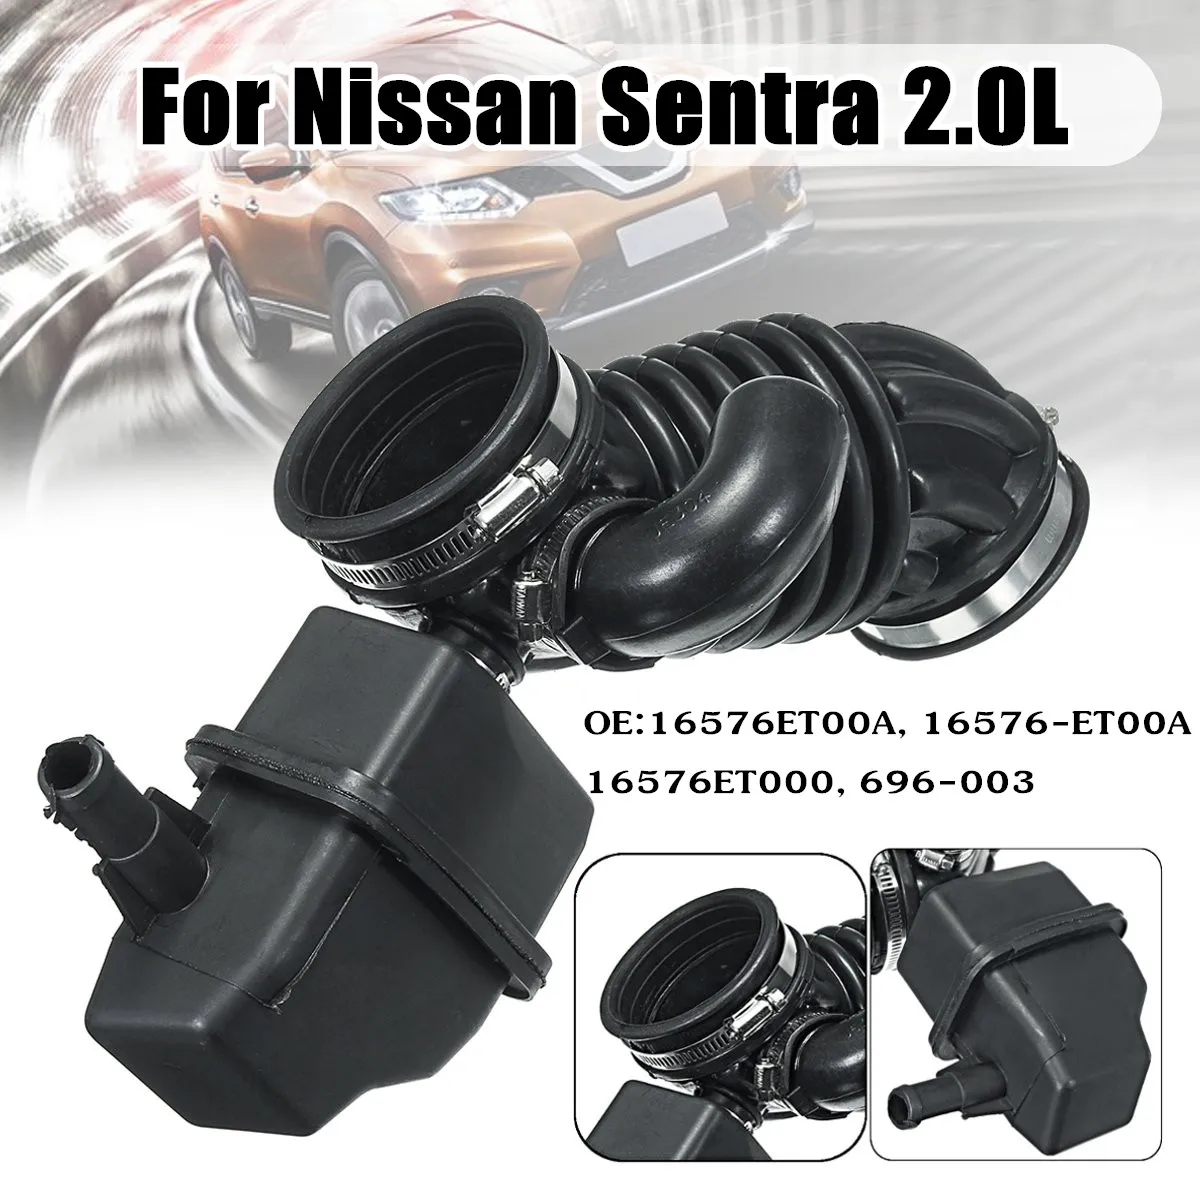 

Car Engine Air Intake Hose With Upper Duct 16576Et00A 696-00 16576-Et000 696-003 For Nissan Sentra 2.0L 2007-2012